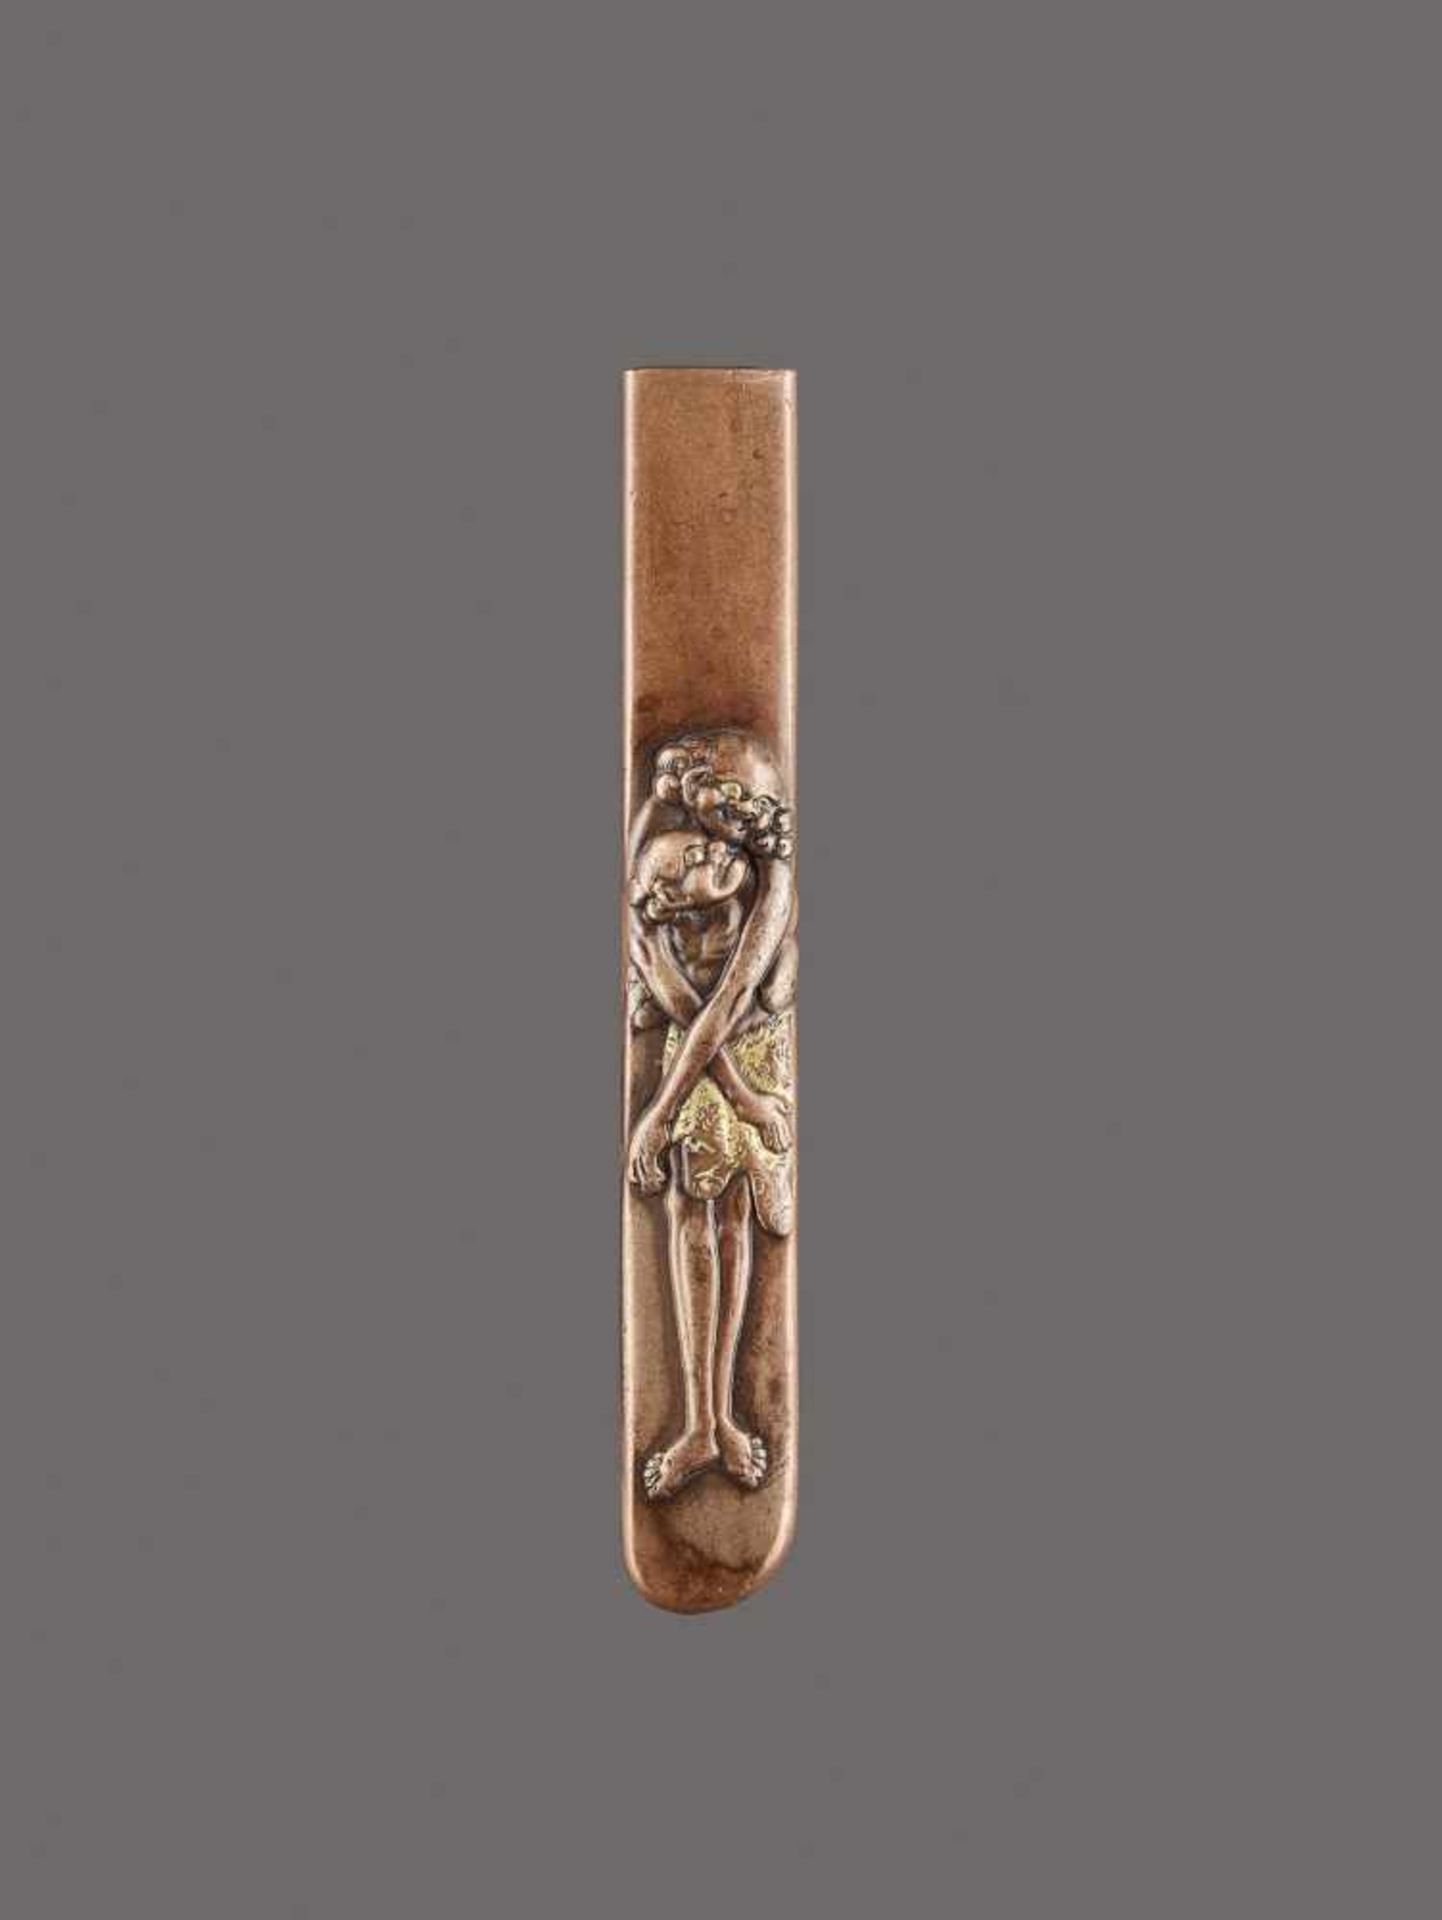 A COPPER KOZUKA HANDLE DEPICTING ASHINAGA AND TENAGA Unsigned, kozuka handle, copper with gold